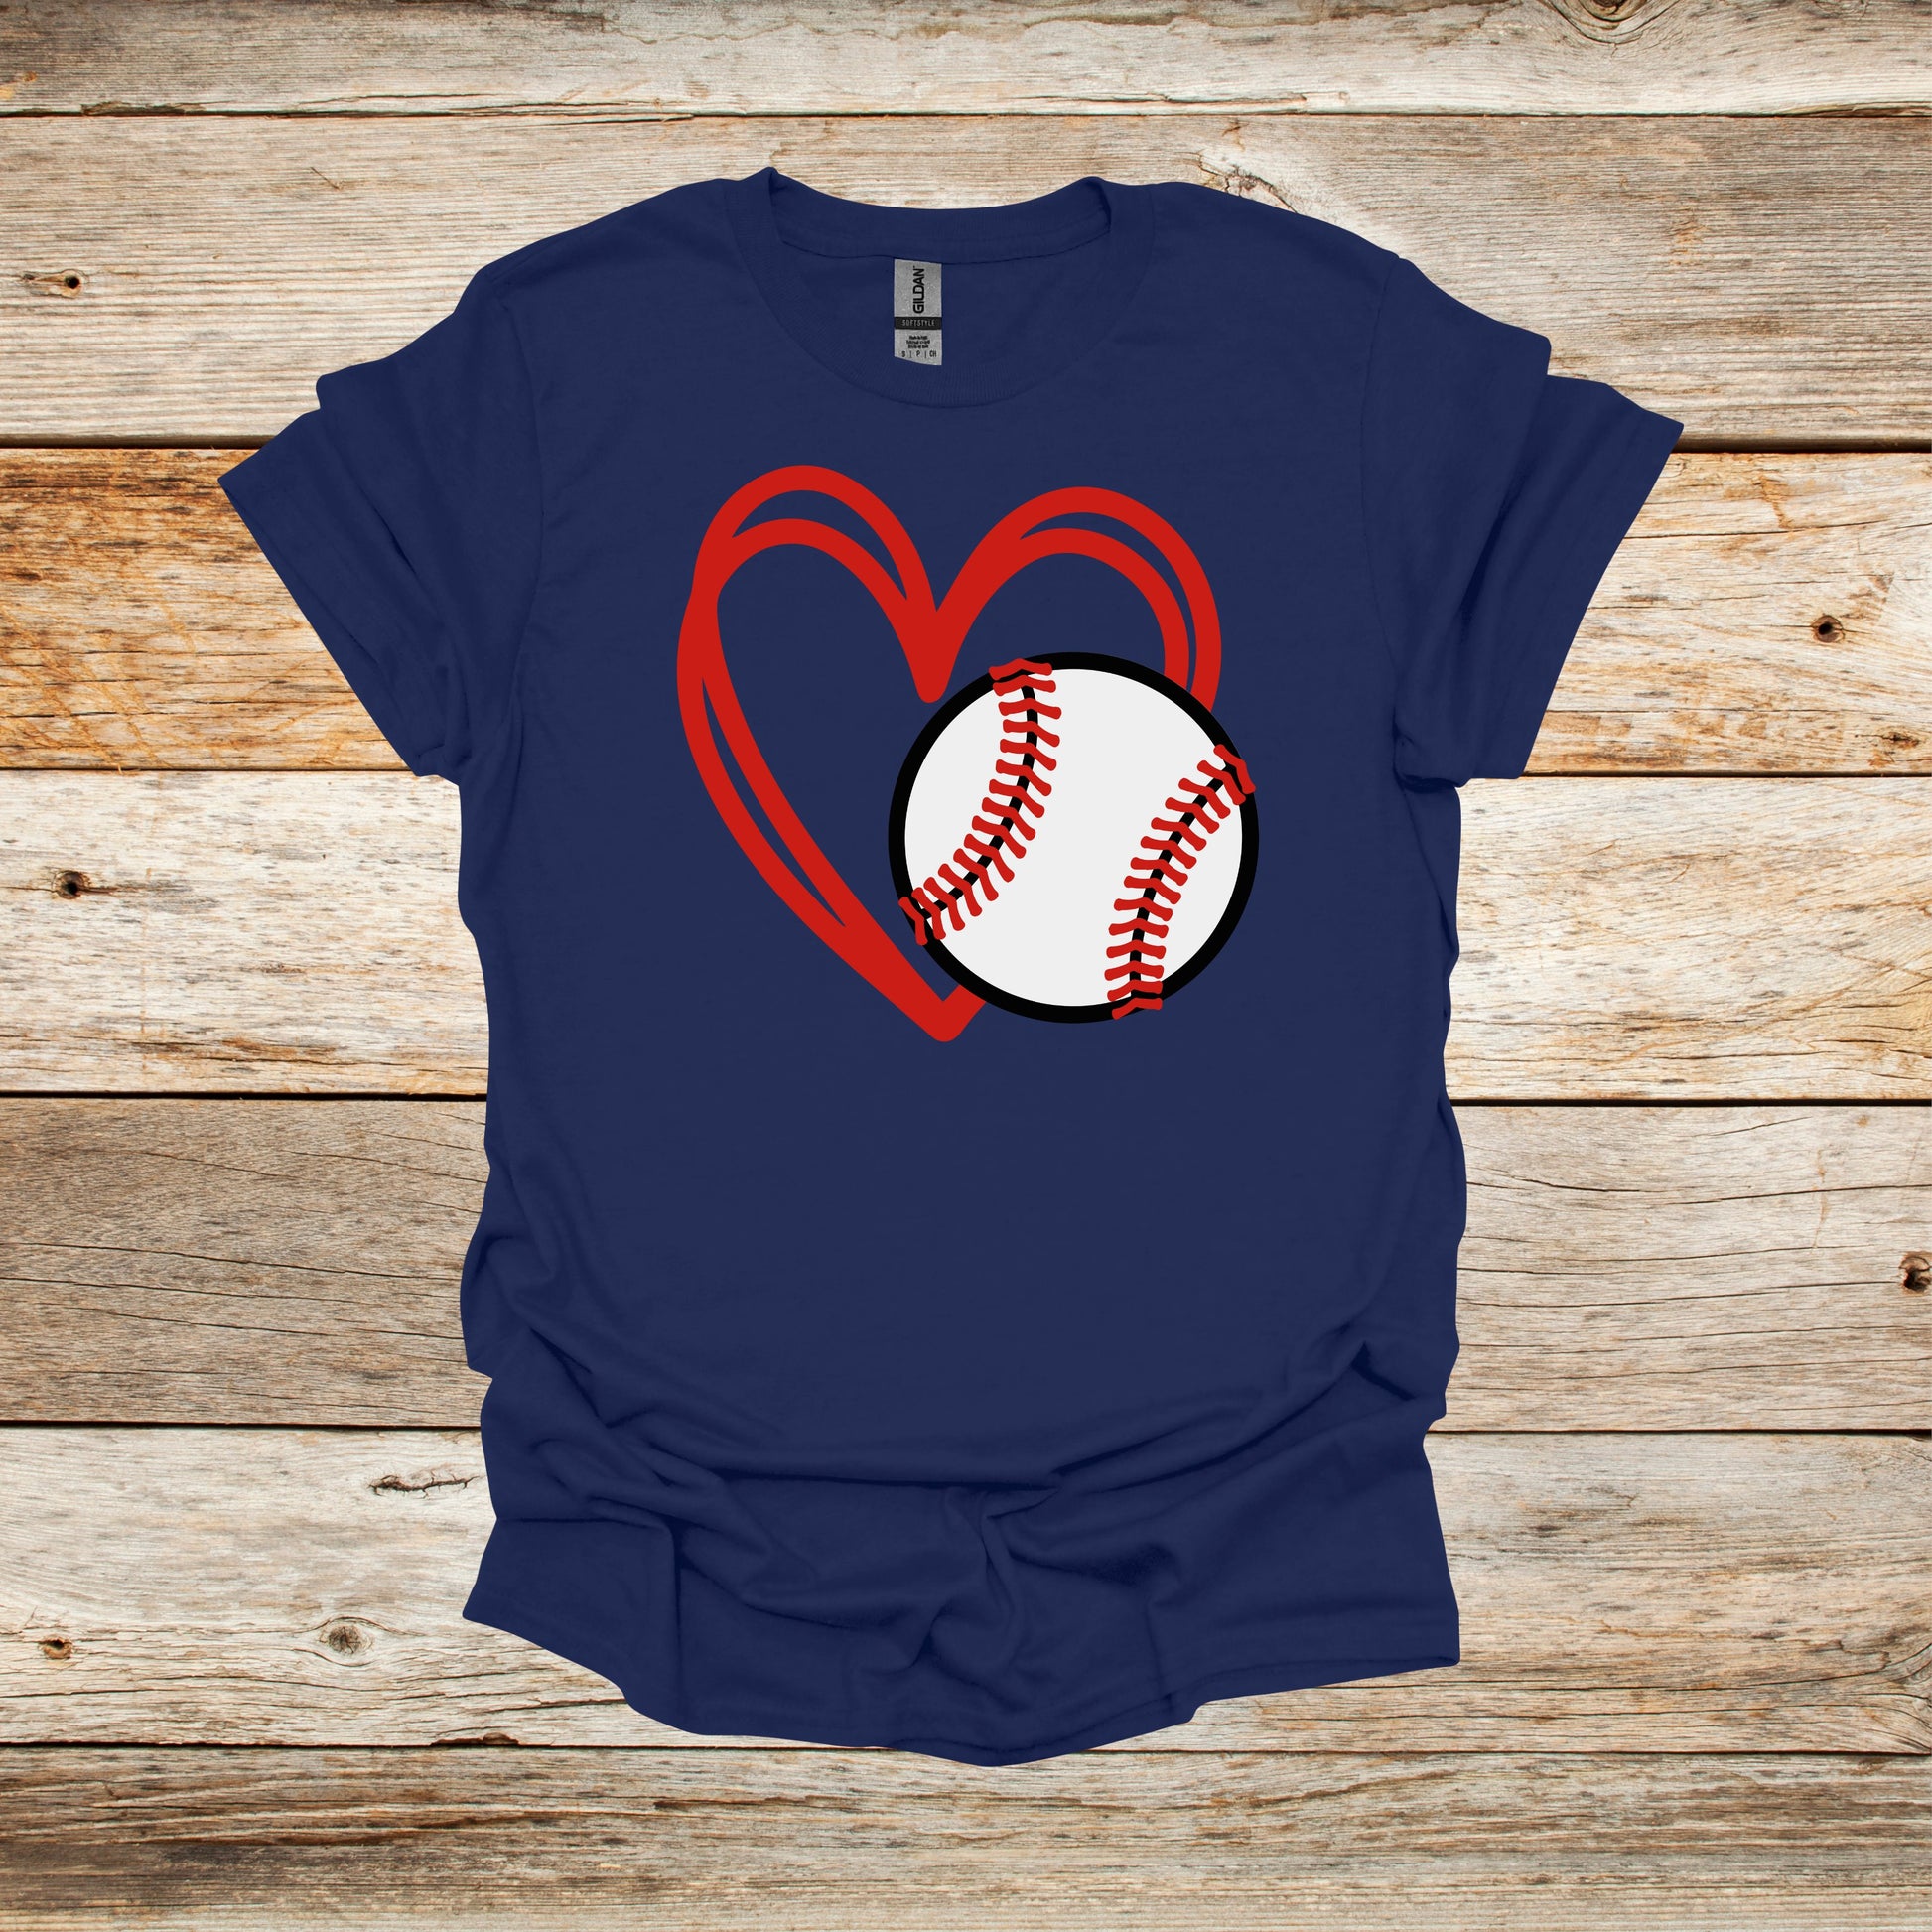 Baseball T-Shirt - Heart Baseball - Adult and Children's Tee Shirts - Sports T-Shirts Graphic Avenue Navy Adult Small 